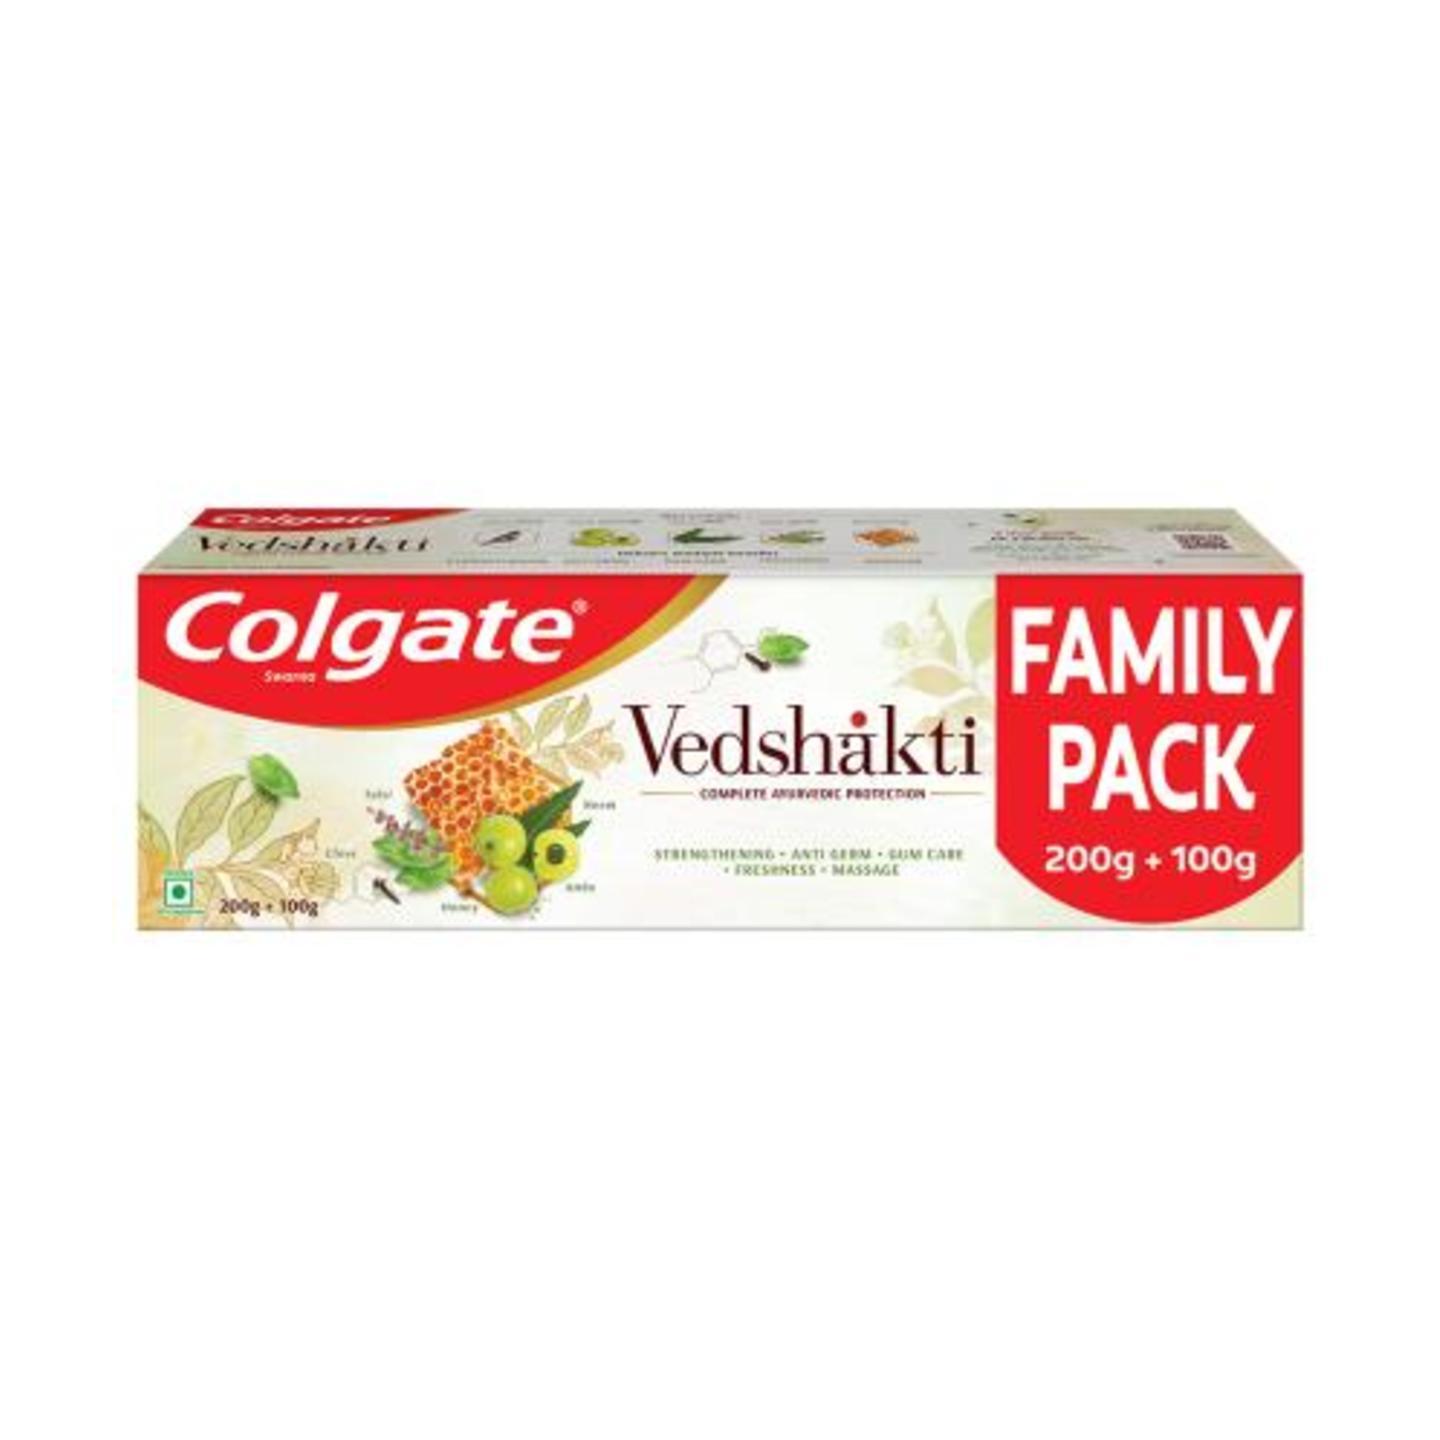 Colgate Swarna Vedshakti Neem, Clove and Honey Toothpaste 300 g